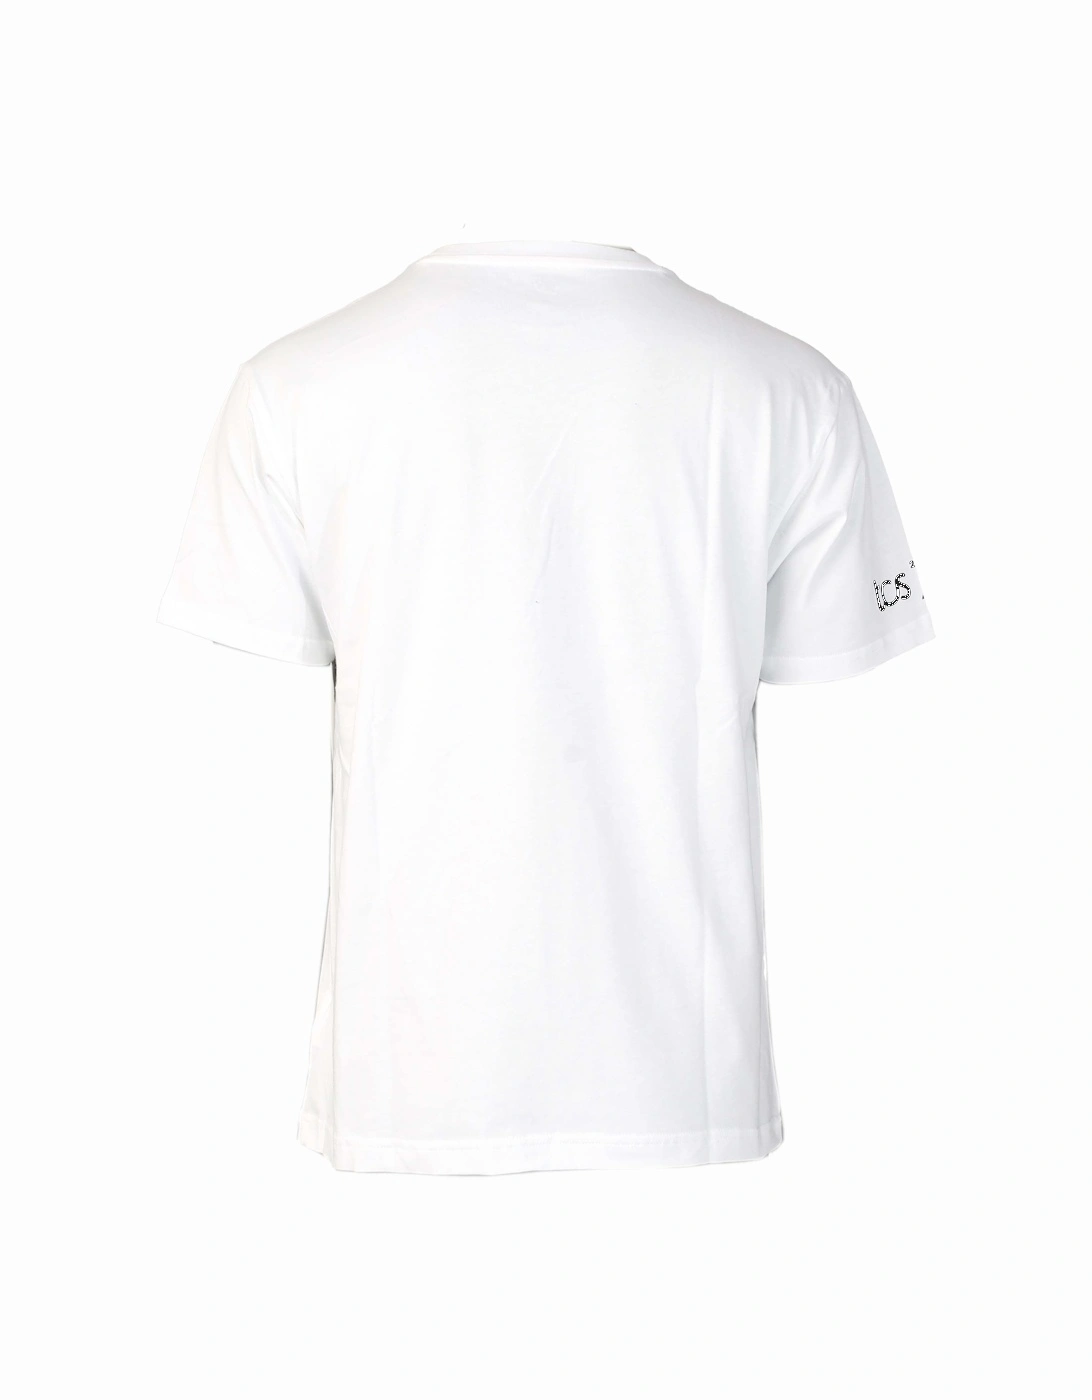 Mens NB Athletics Amplified T-Shirt